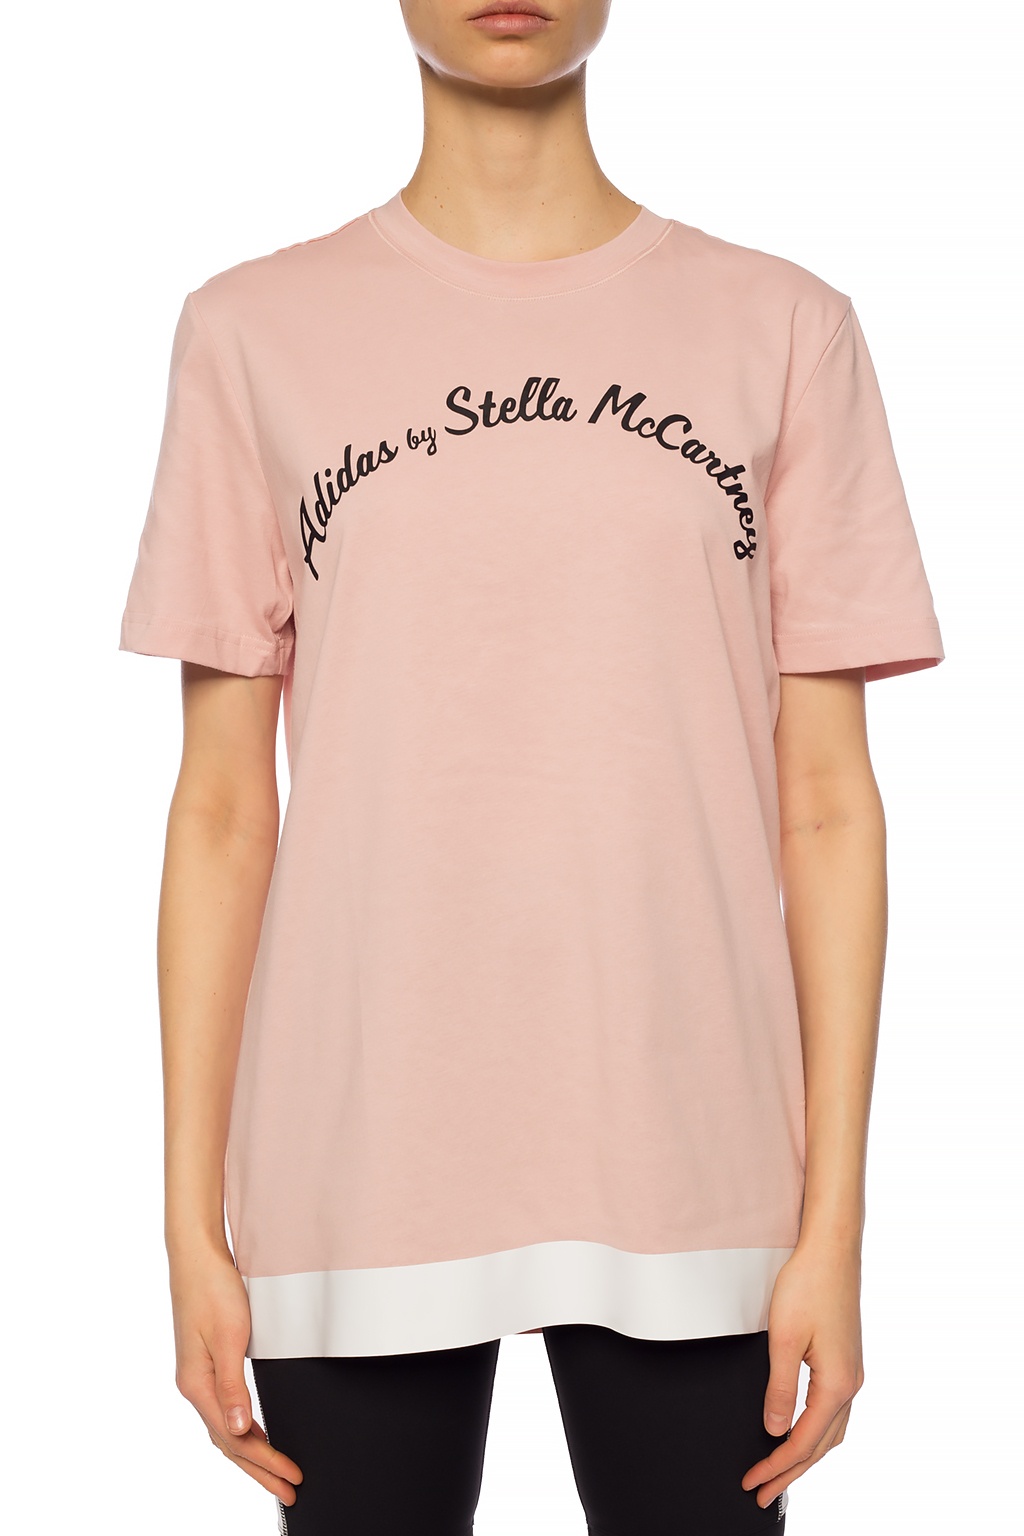 adidas by stella mccartney t shirt